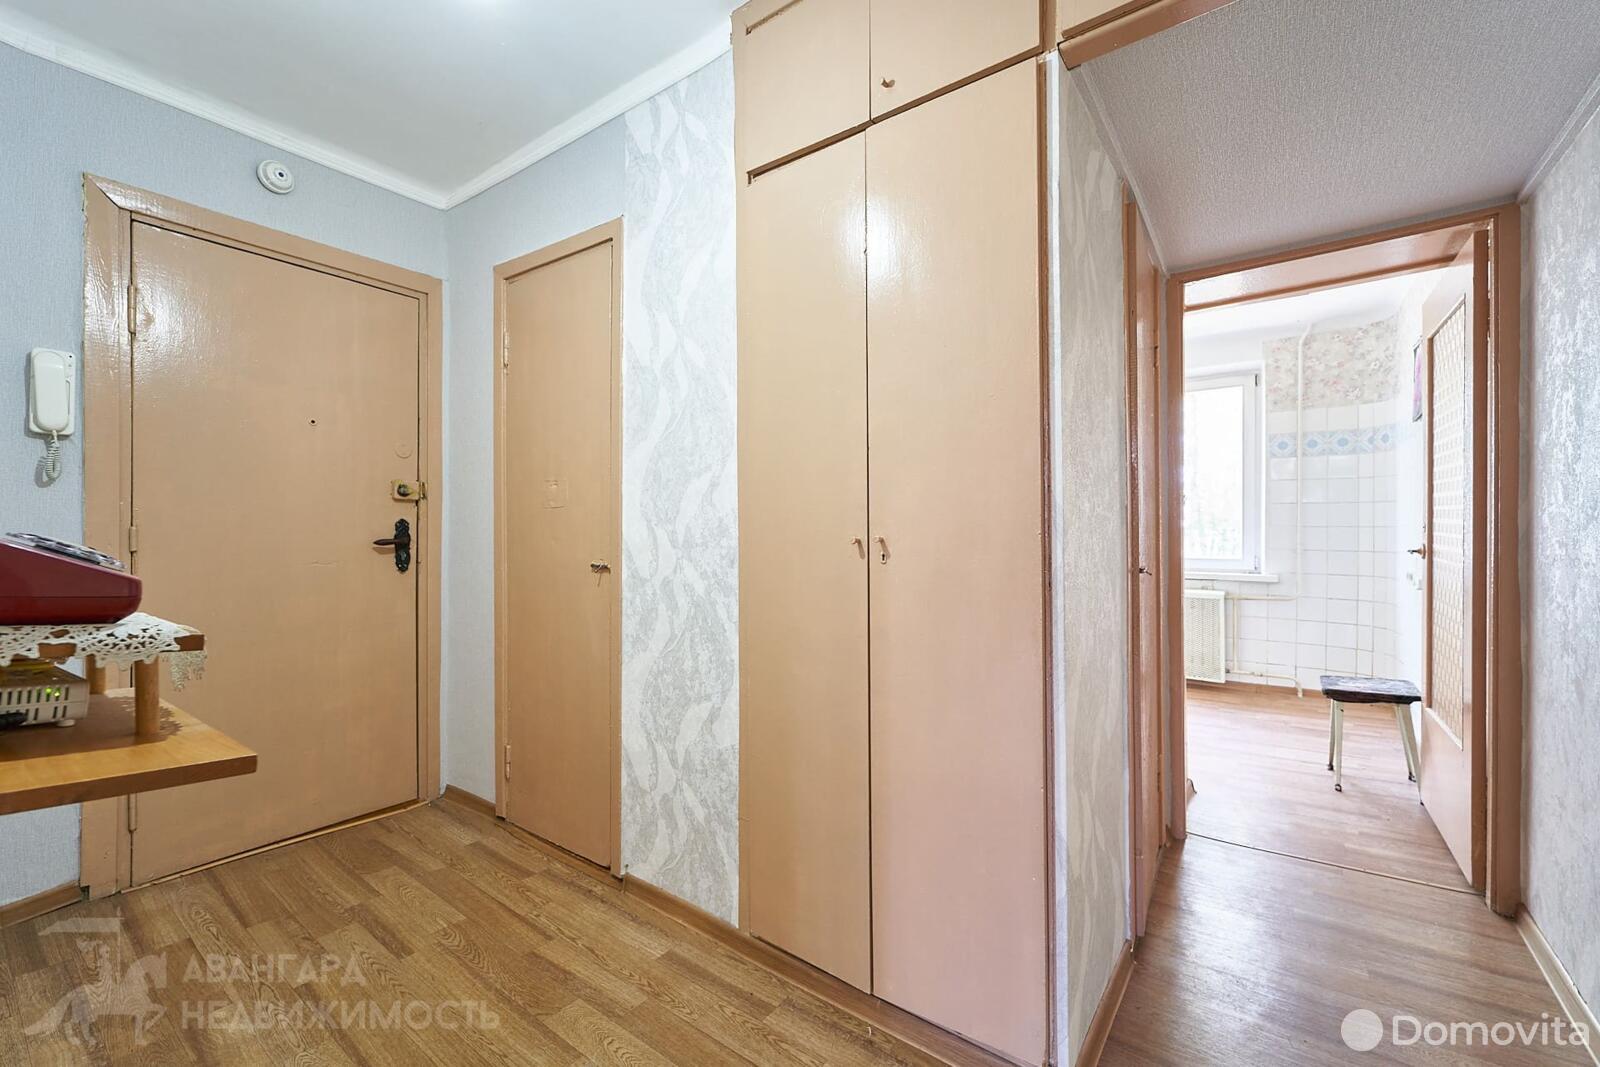 квартира, Минск, ул. Брикета, д. 4, стоимость продажи 208 533 р.